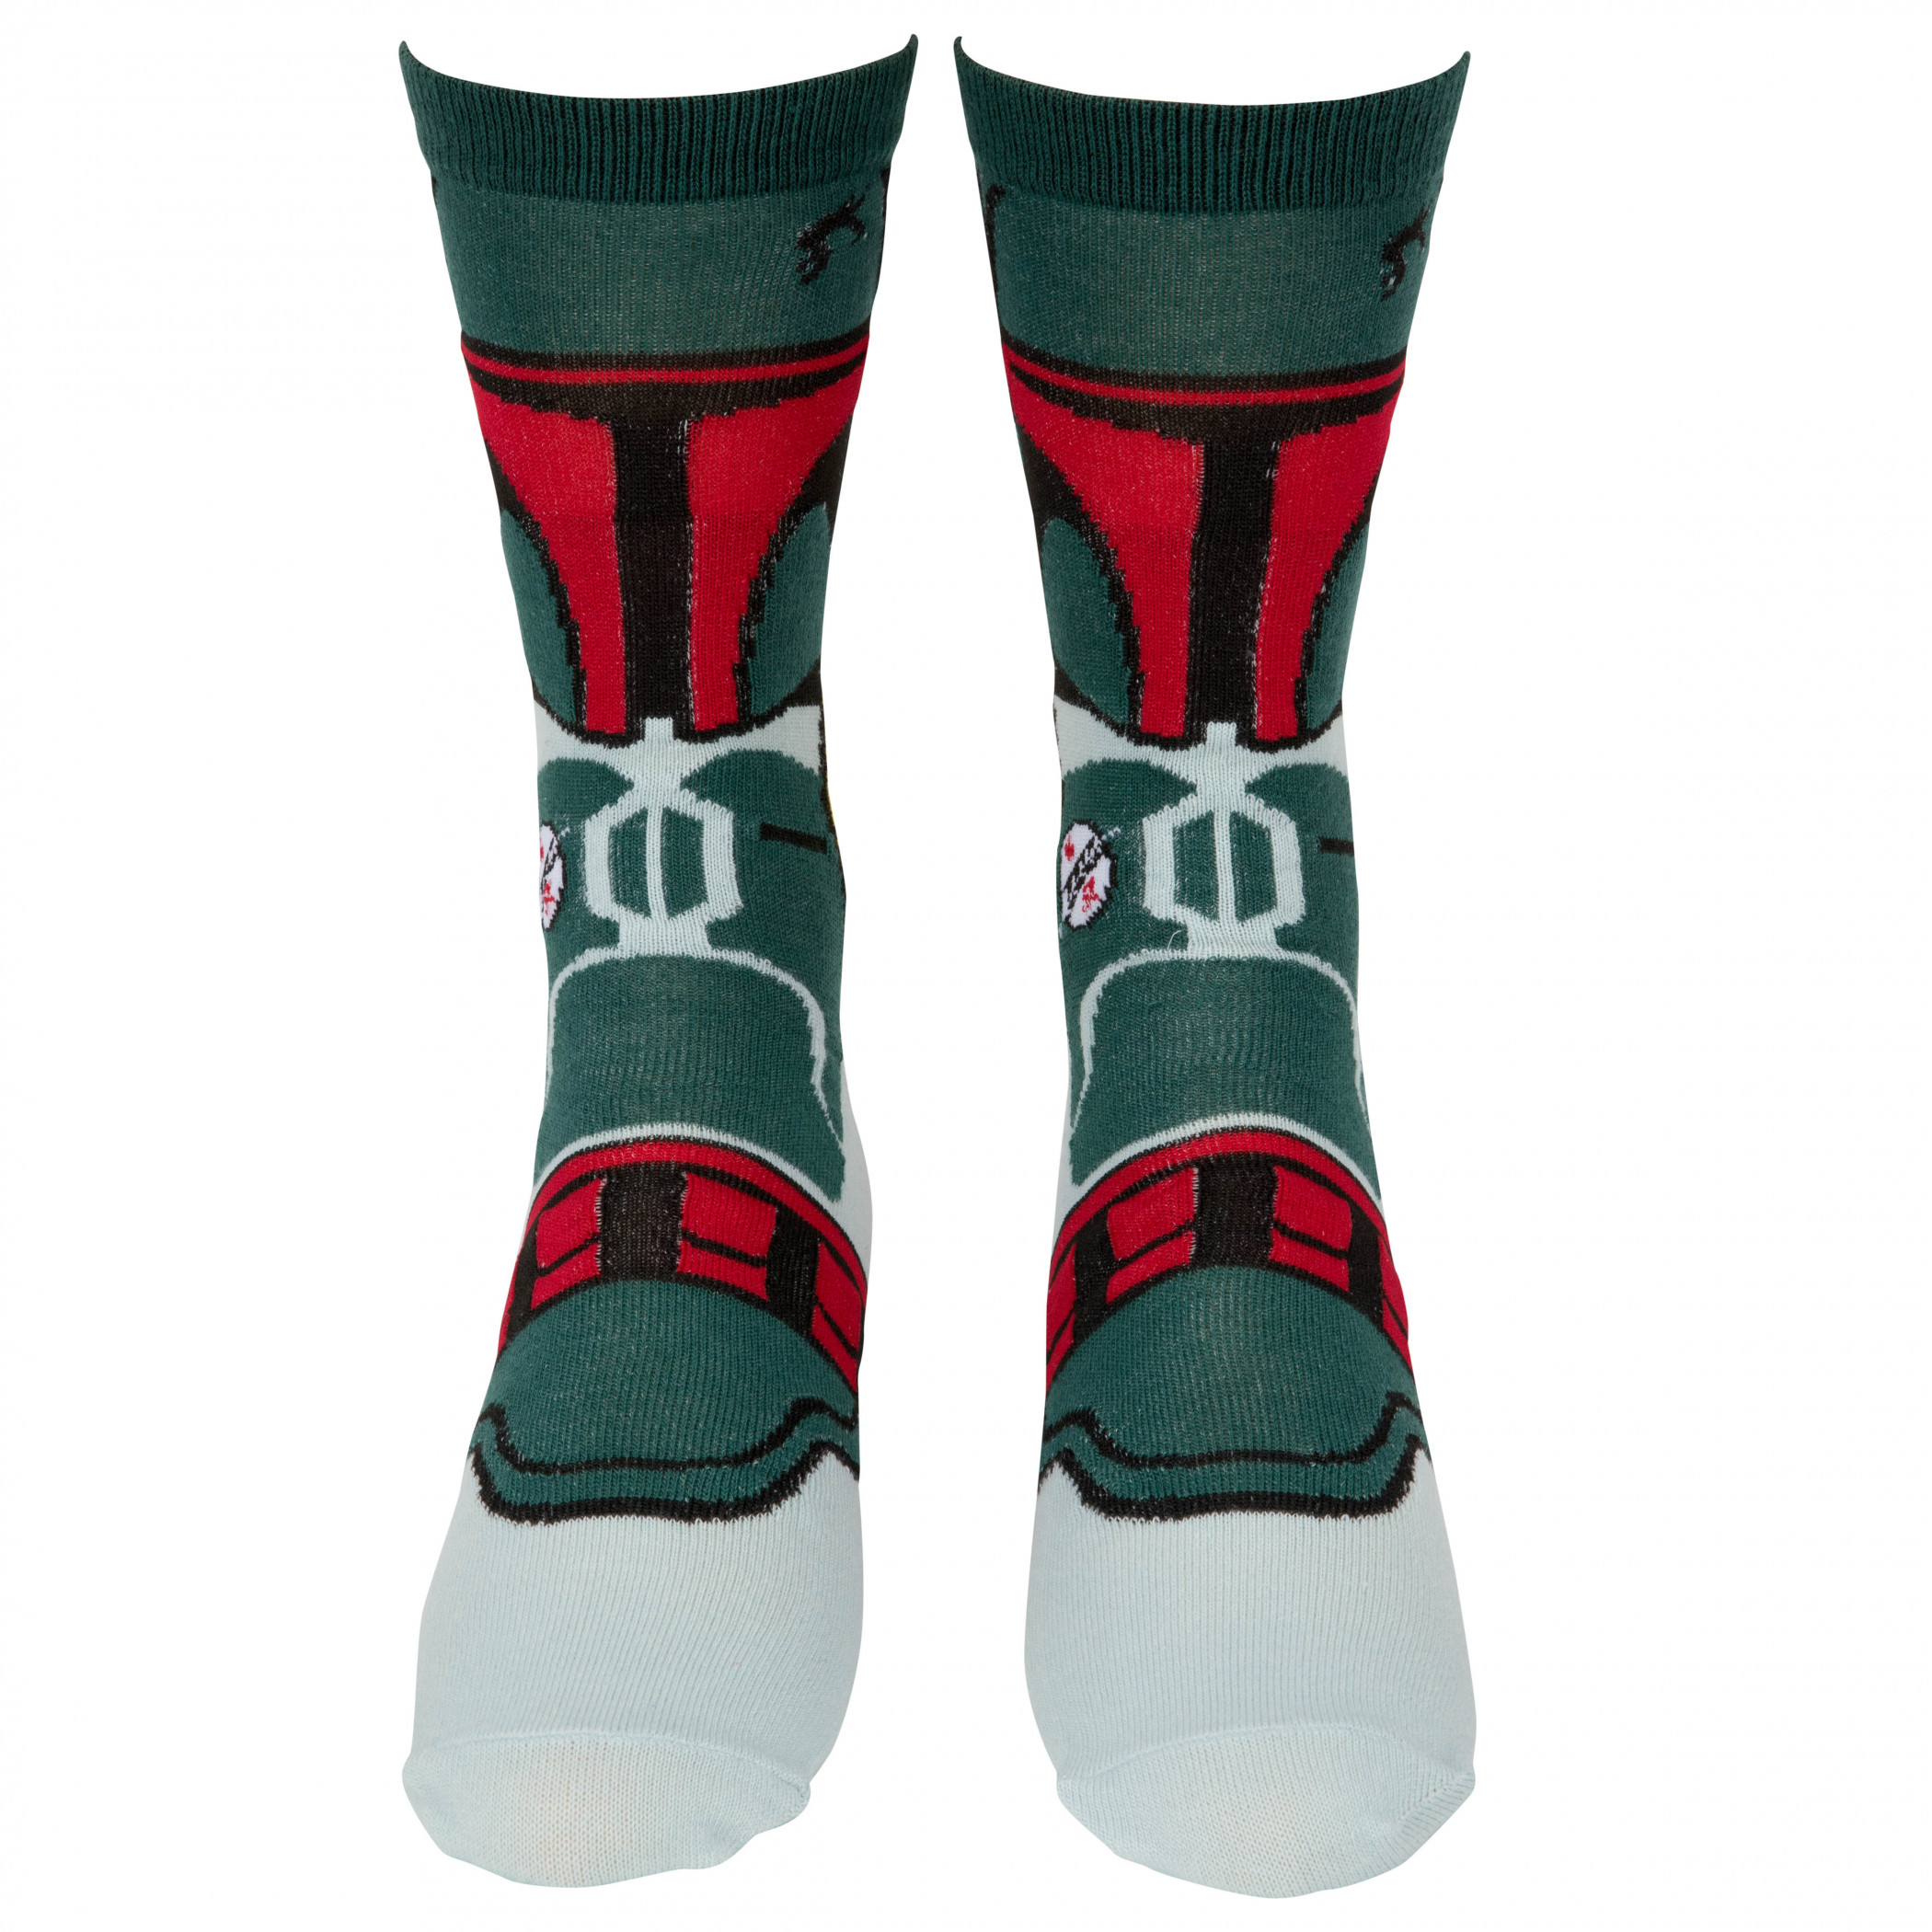 Star Wars Character Print 4-Pack Crew Socks in Gift Box